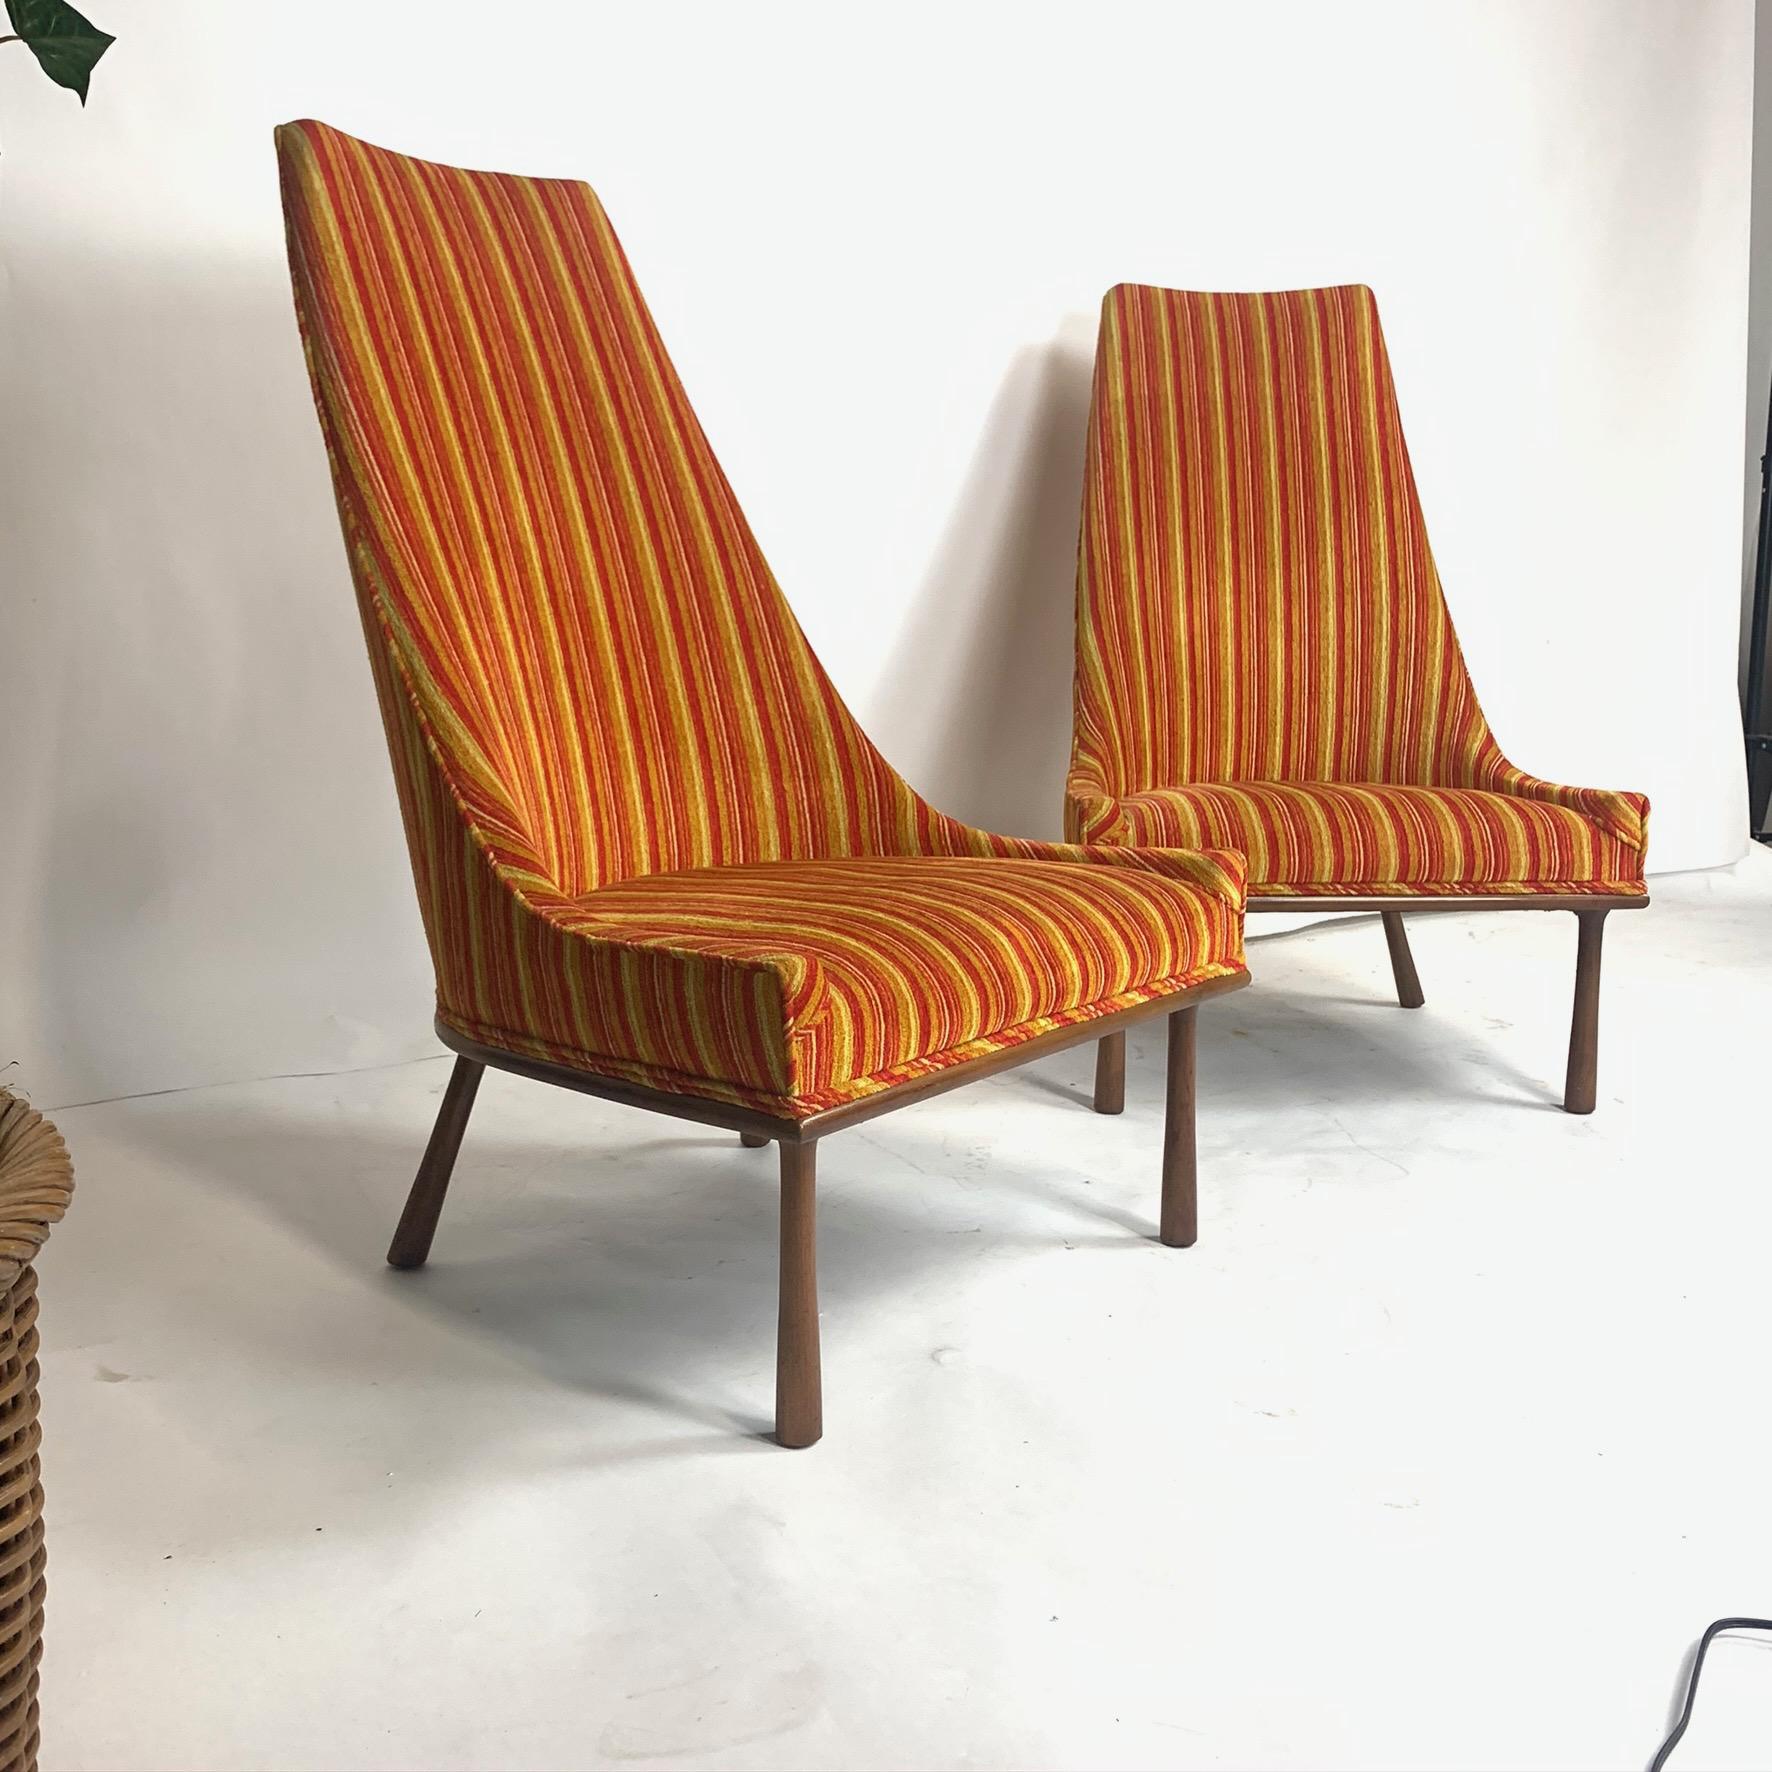 Carved Sleek Sculptural High Back Chairs 1960s Mid-Century Modern Velvet and Walnut